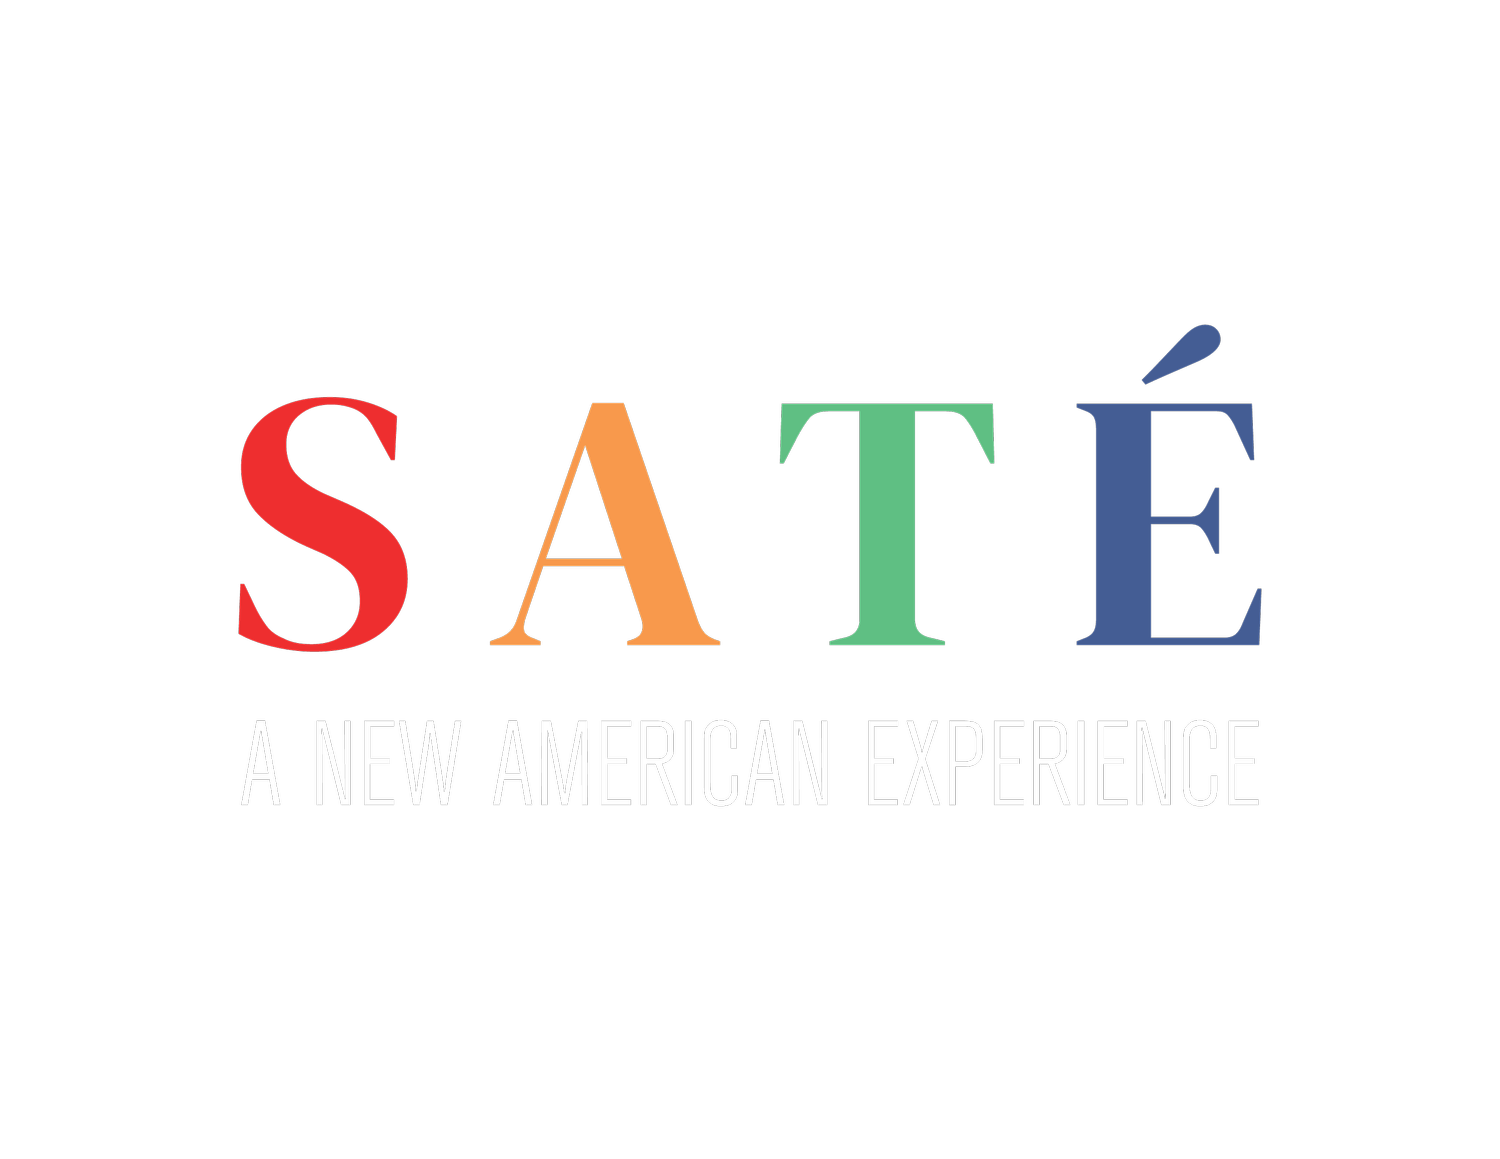 Saté: A New American Experience